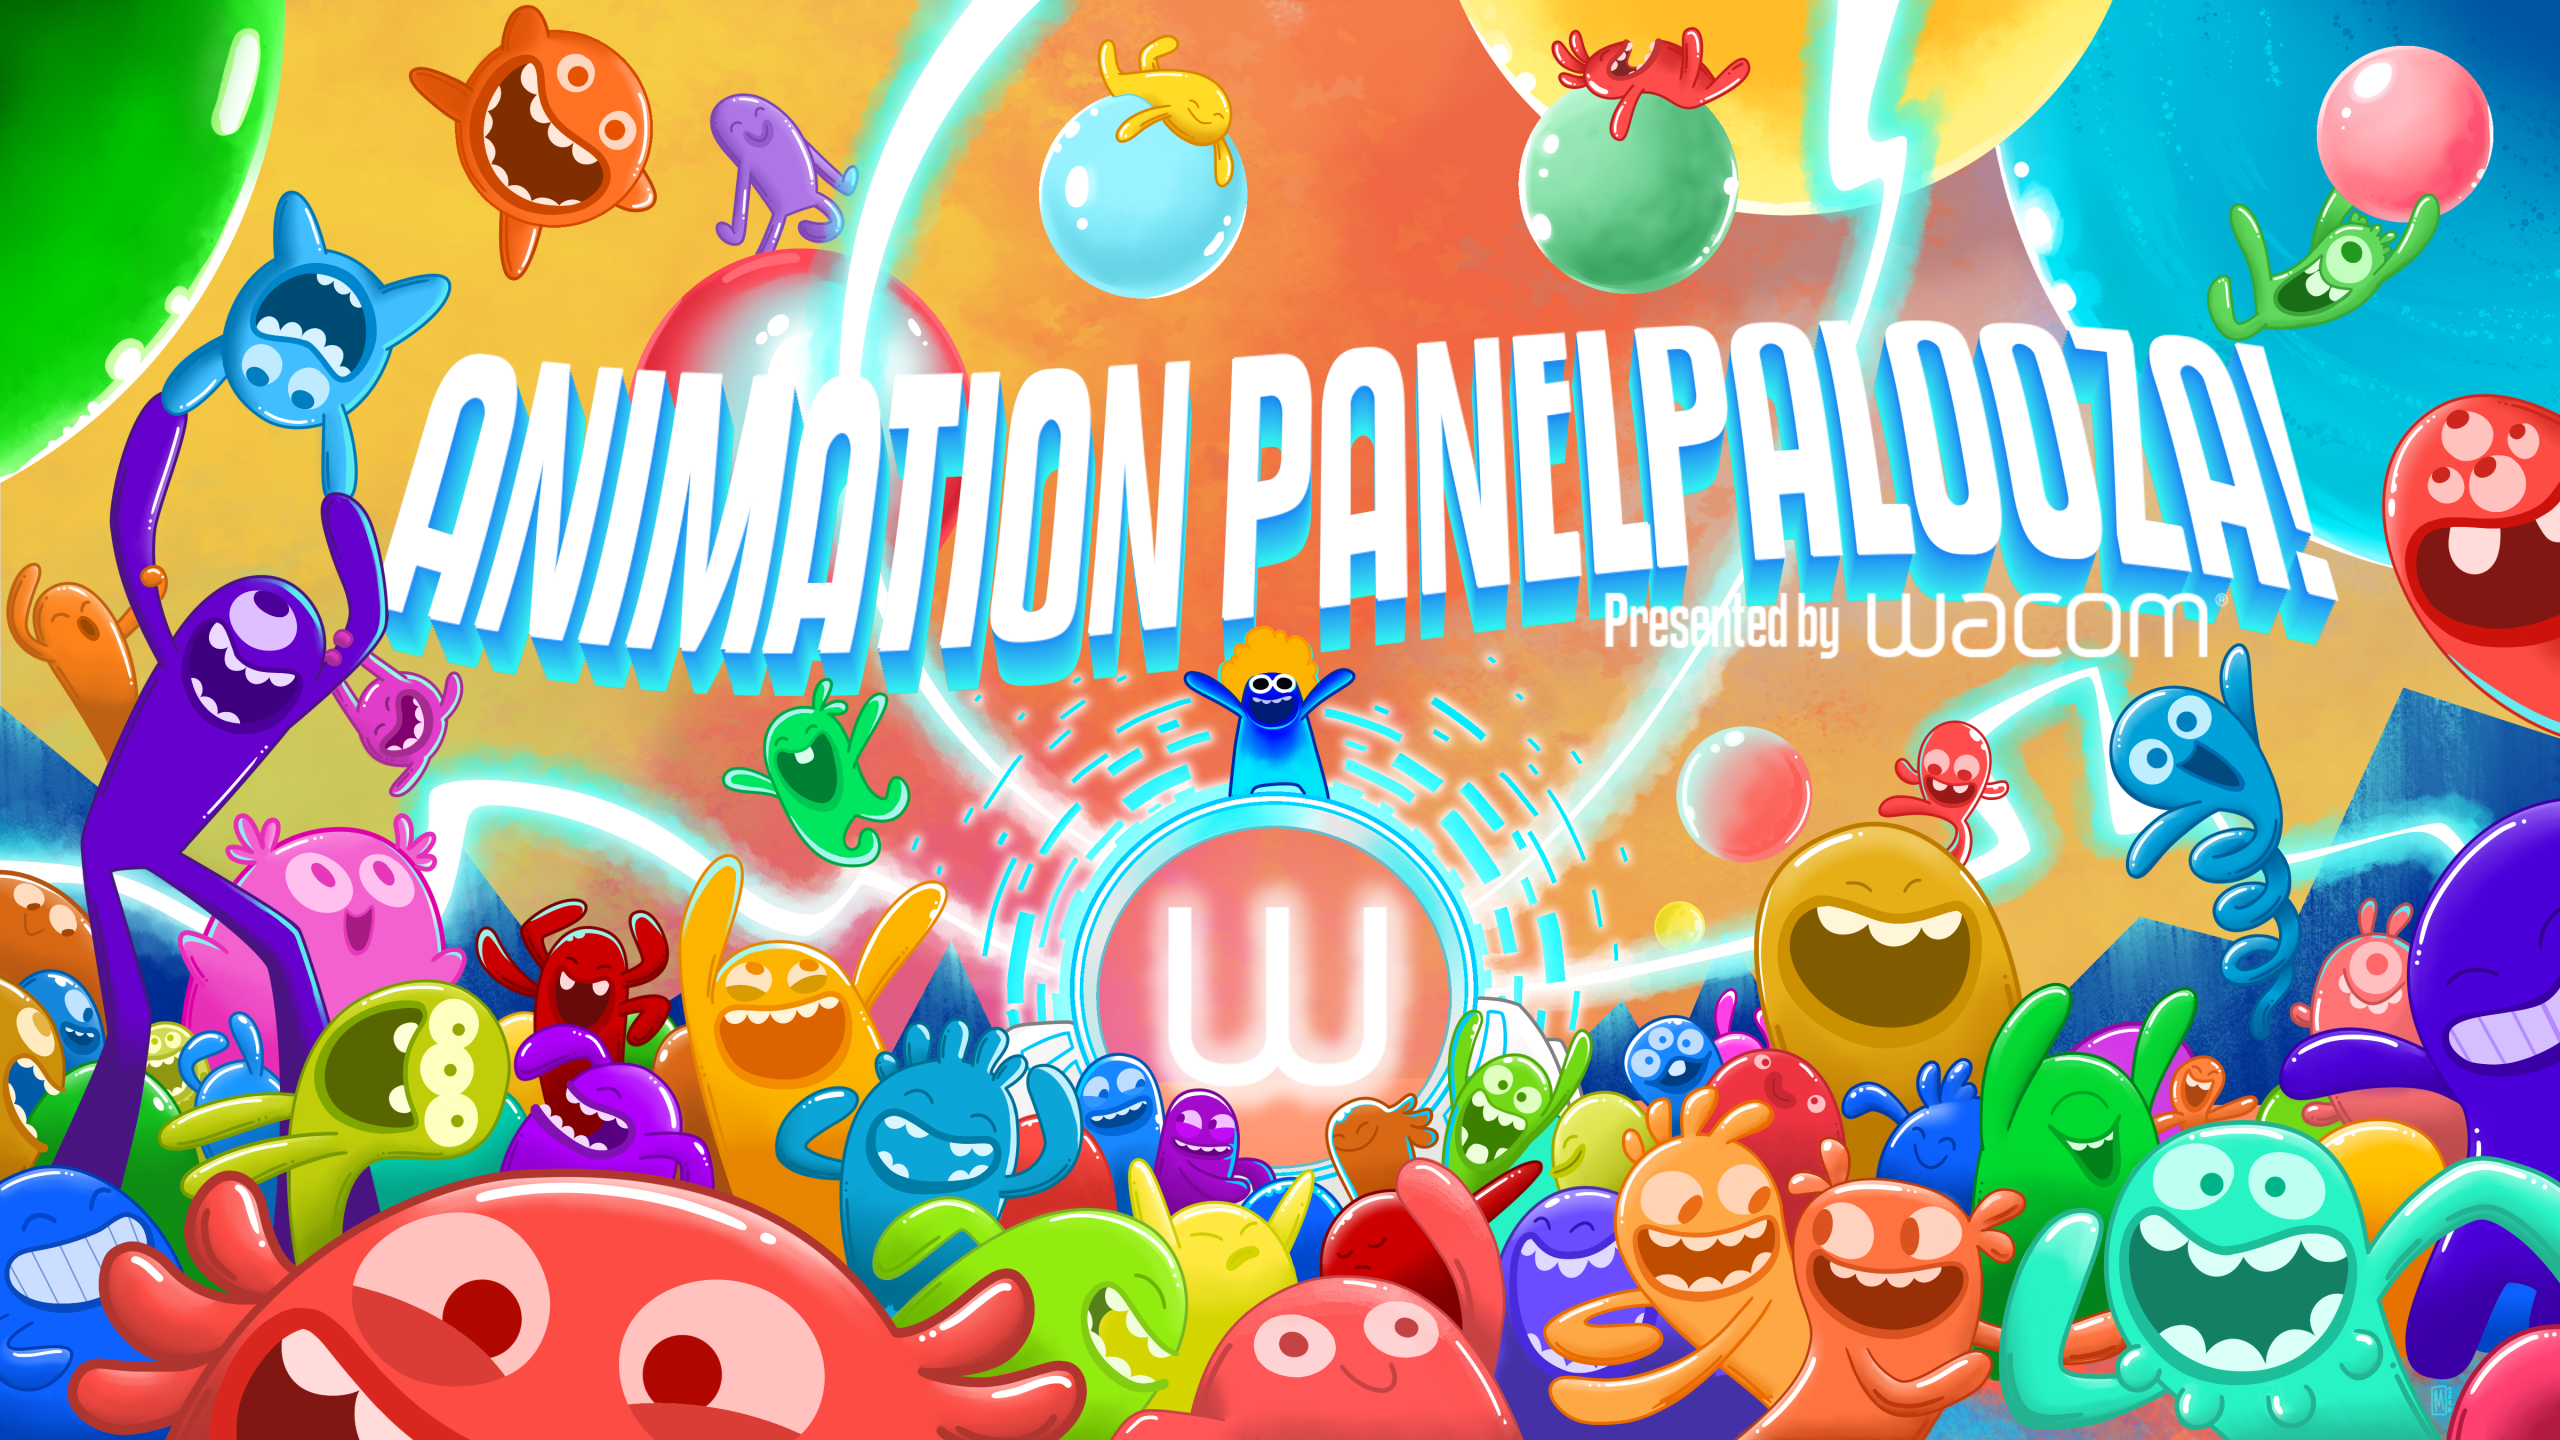 Animation Panelpalooza